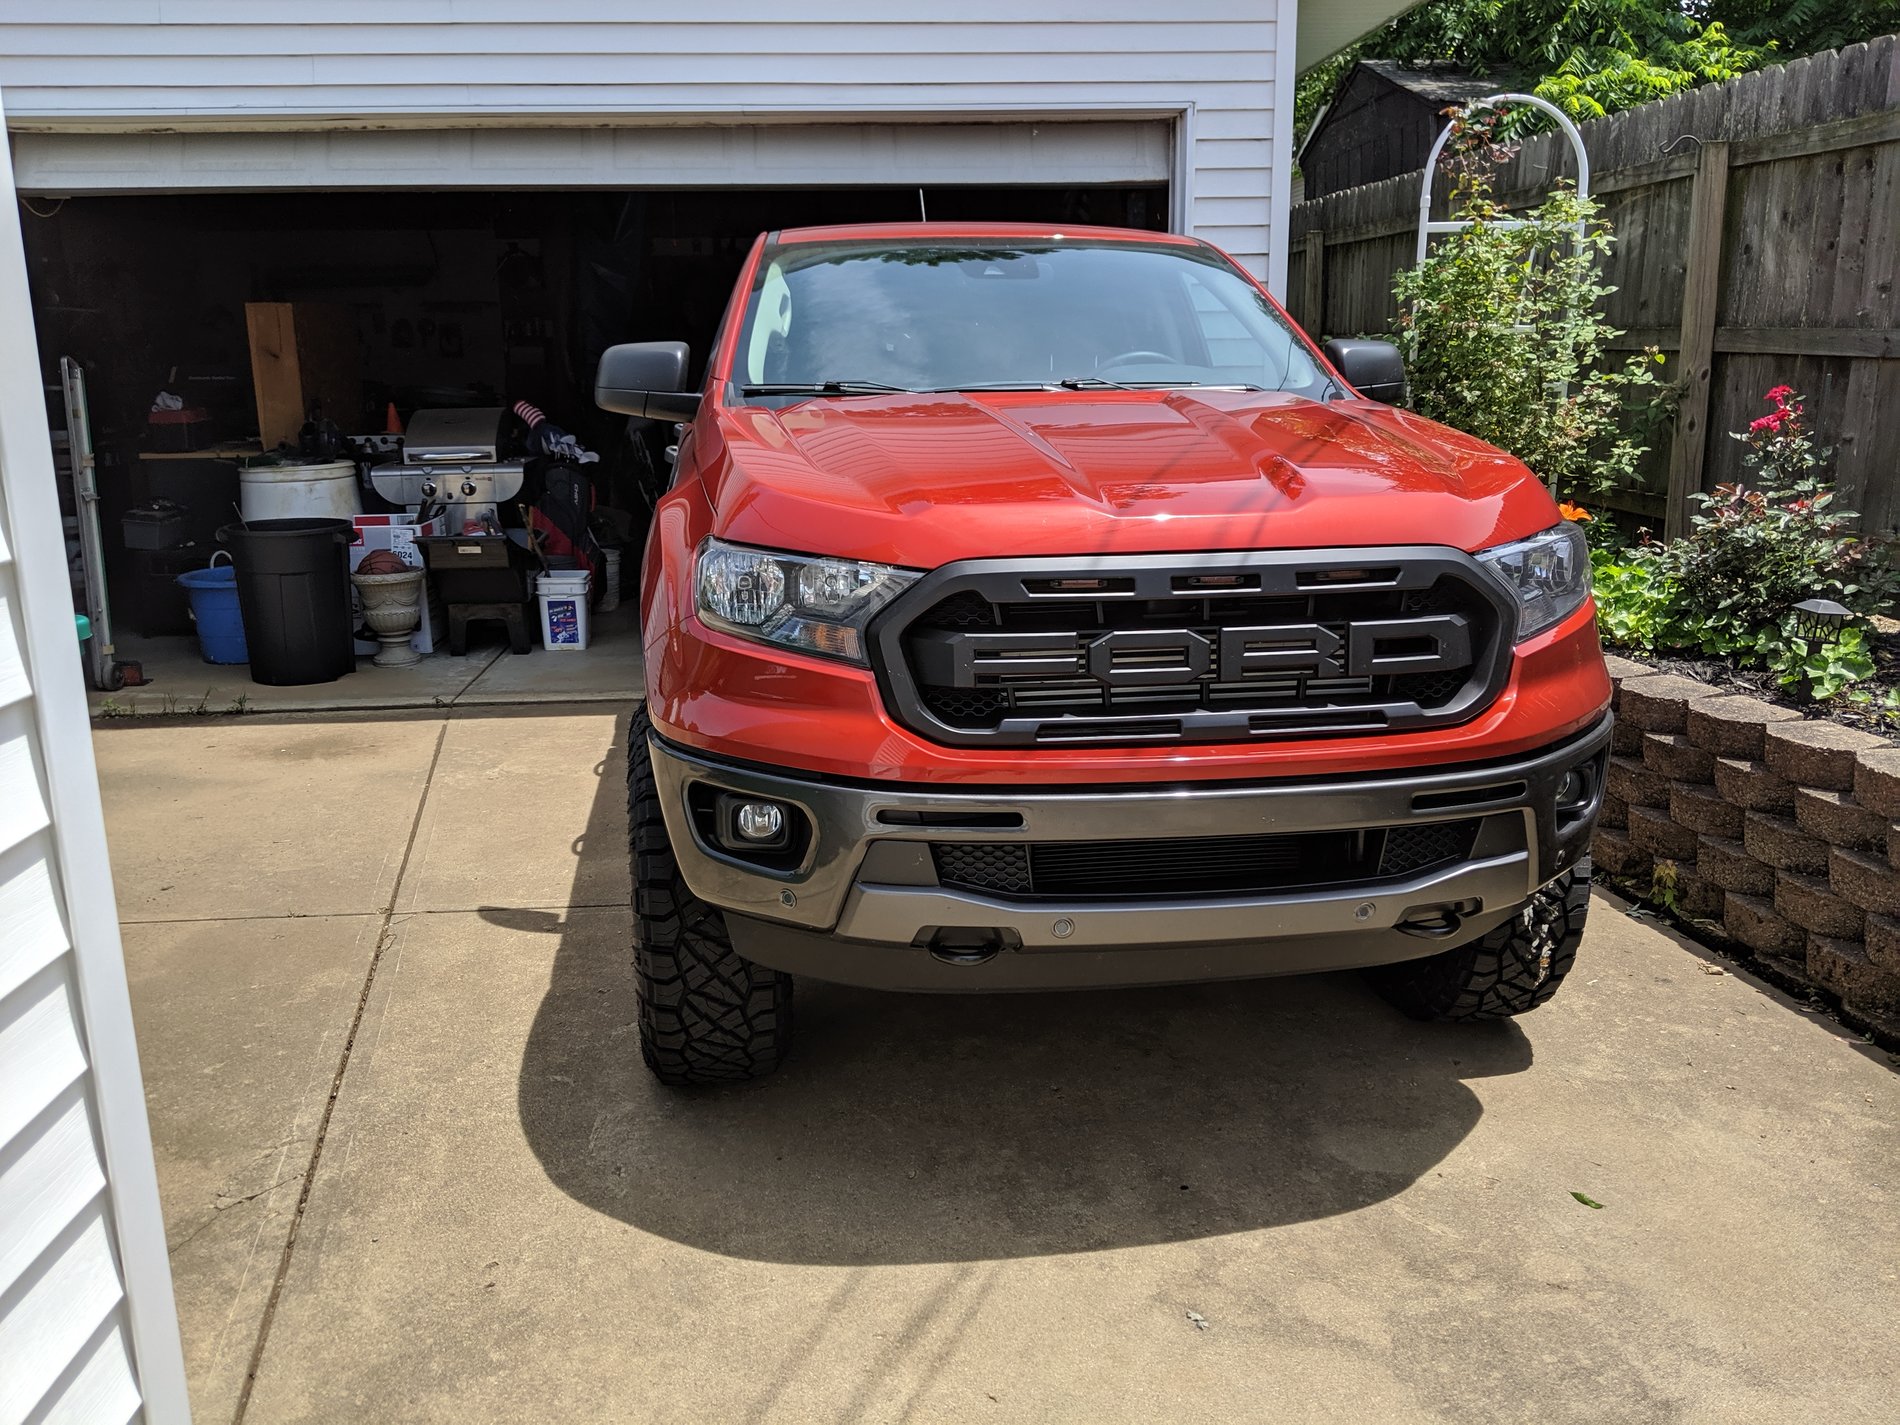 Ford Ranger LewisLegacy's RedRanger MVIMG_20190622_135112